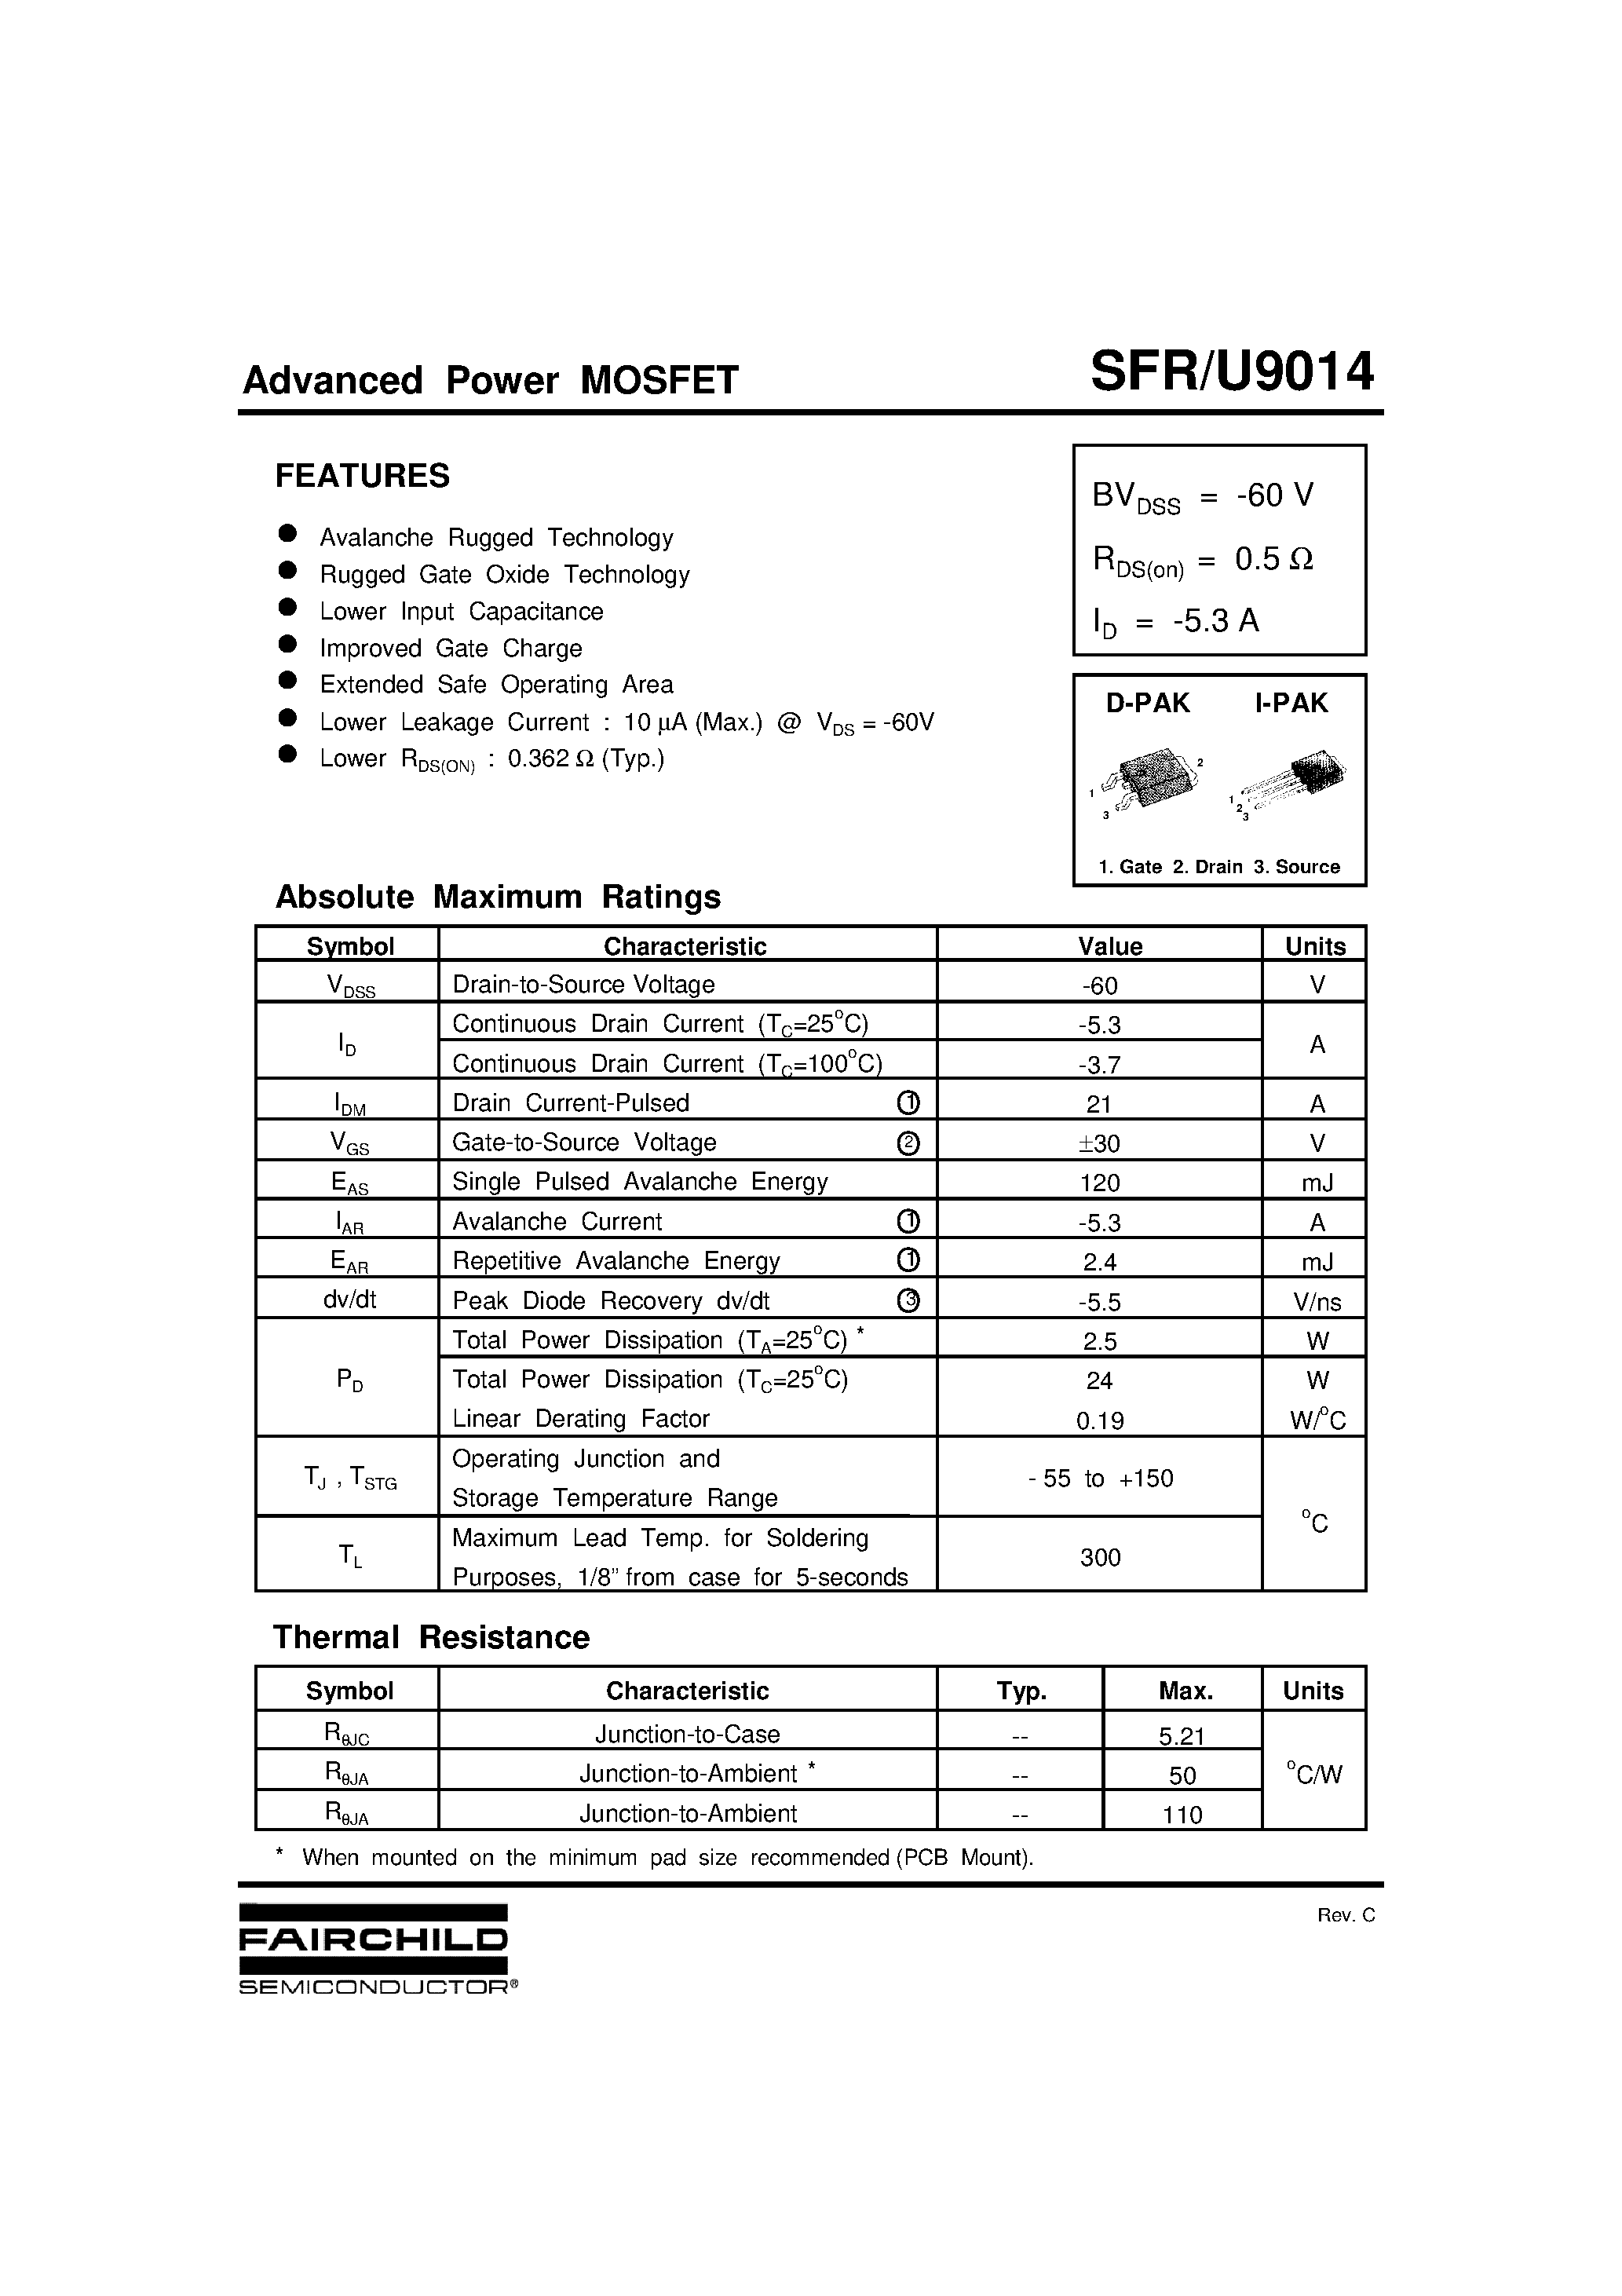 Datasheet SFR9014 - Advanced Power MOSFET page 1